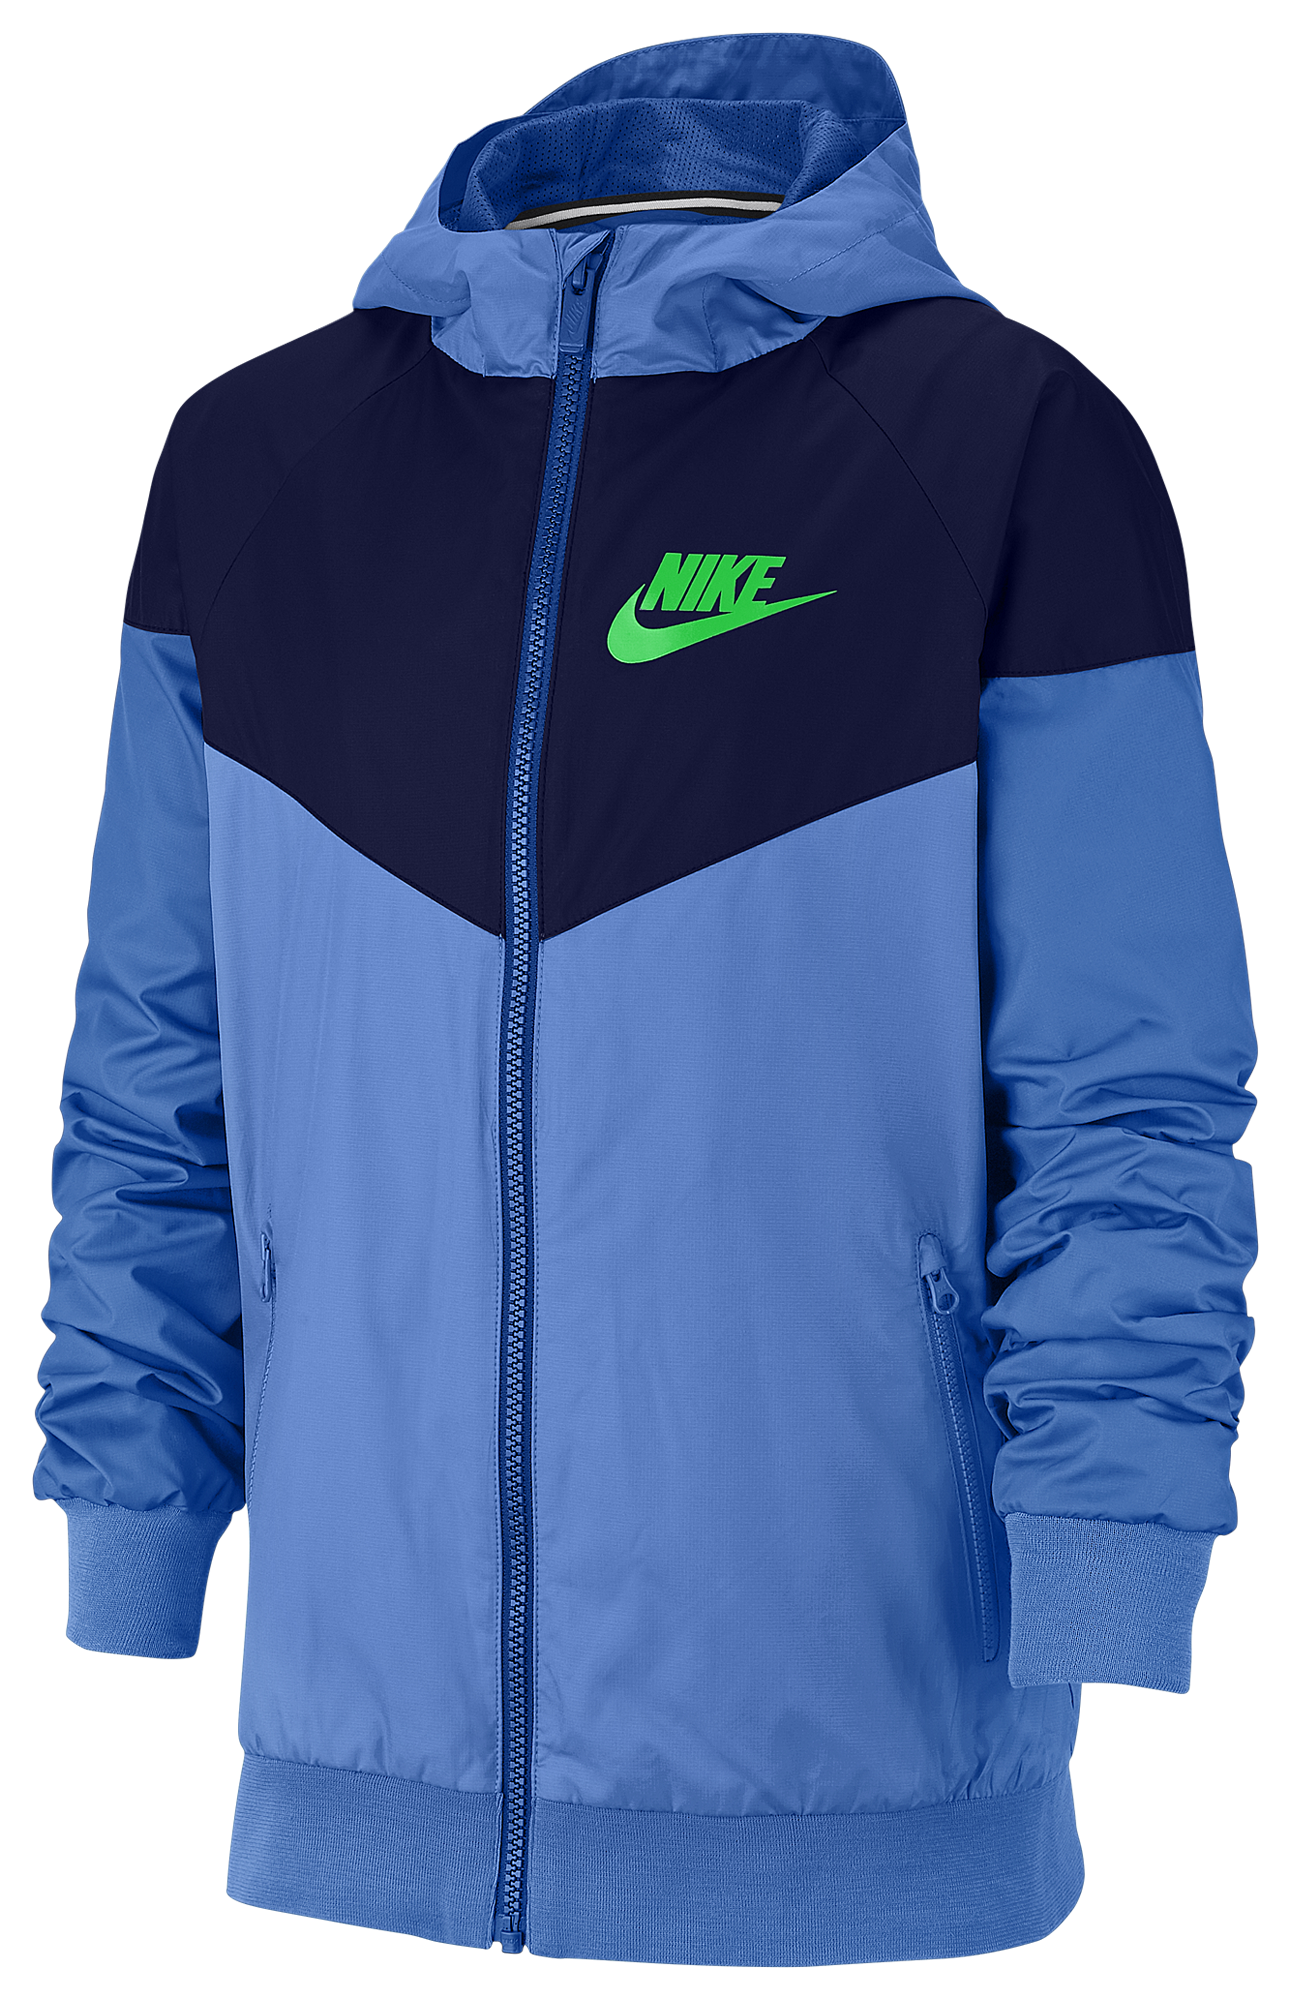 Nike Windrunner Jackets | Foot Locker